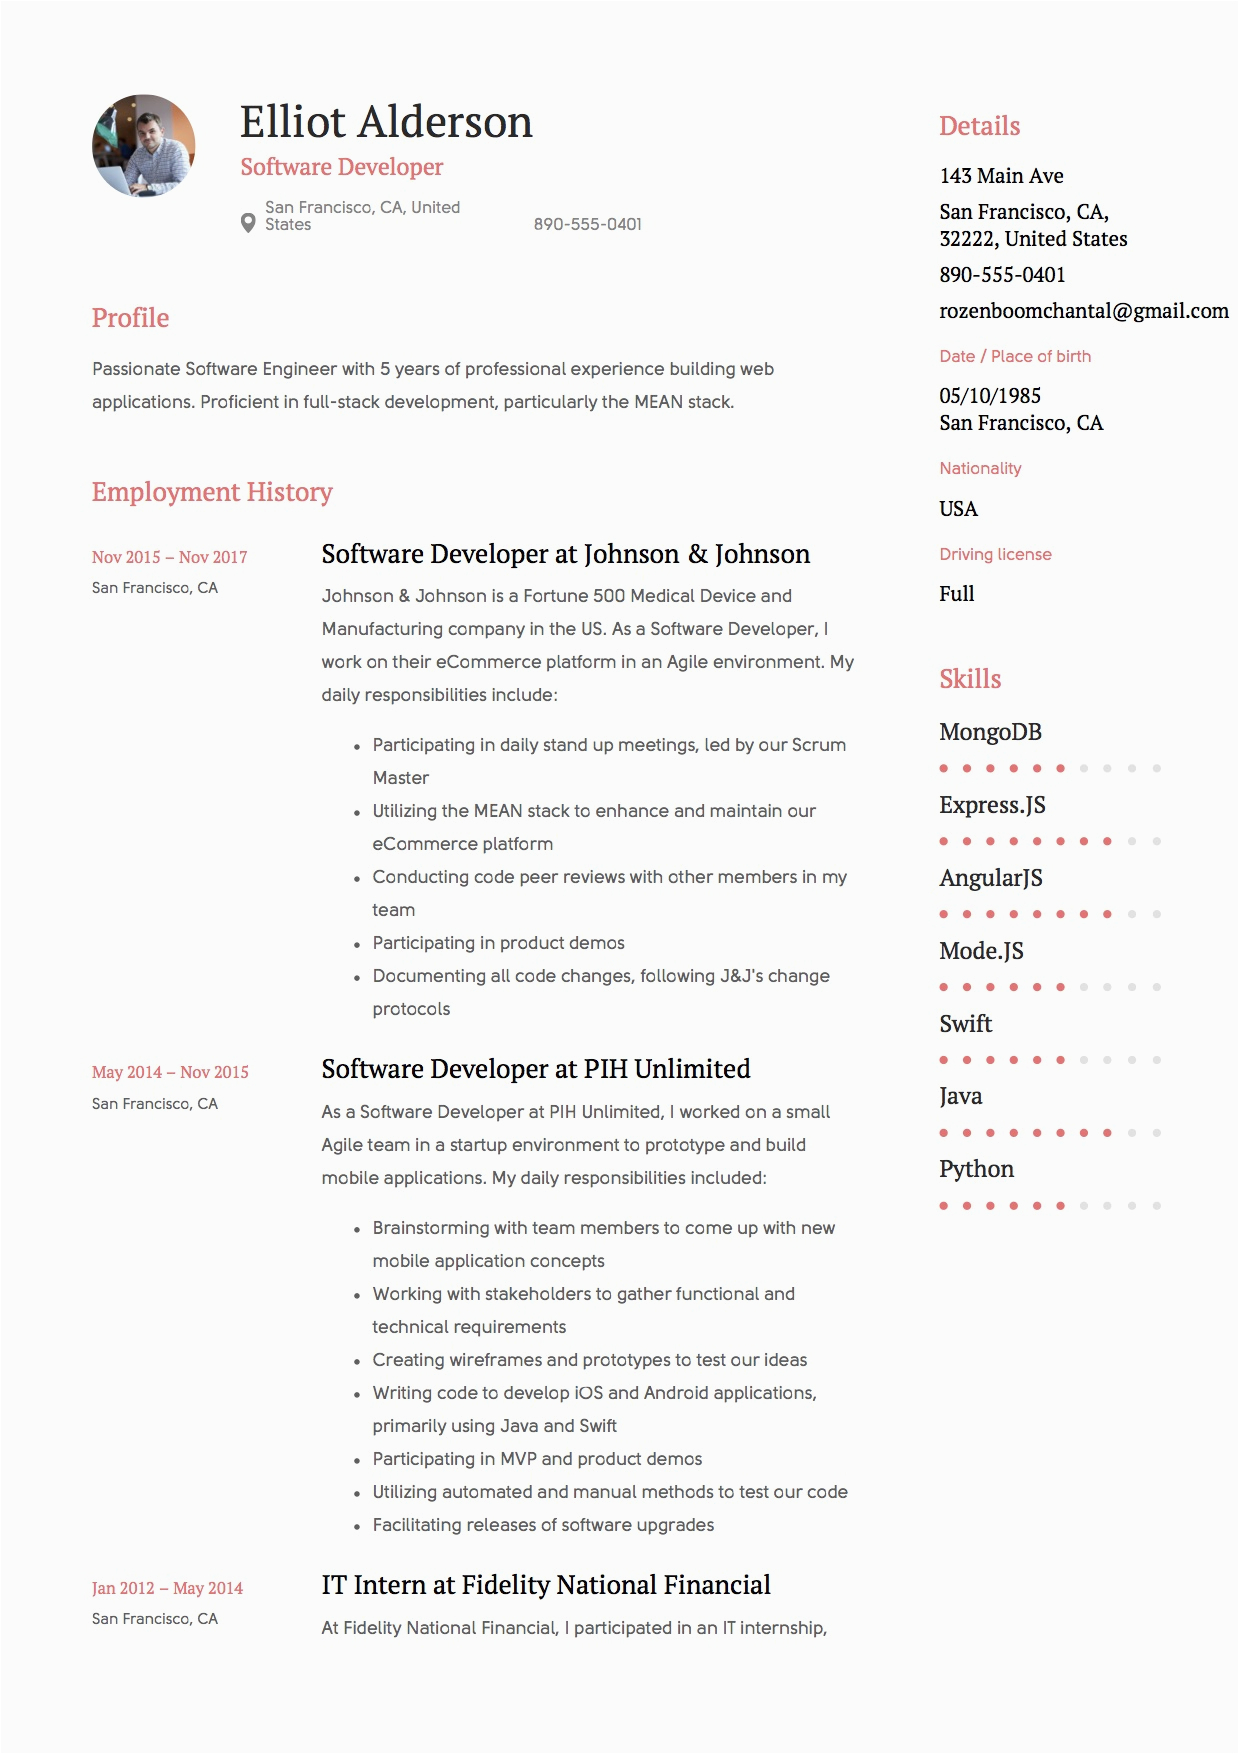 Software Developer Job Description Resume Sample Guide software Developer Resume 19 Examples Word & Pdf